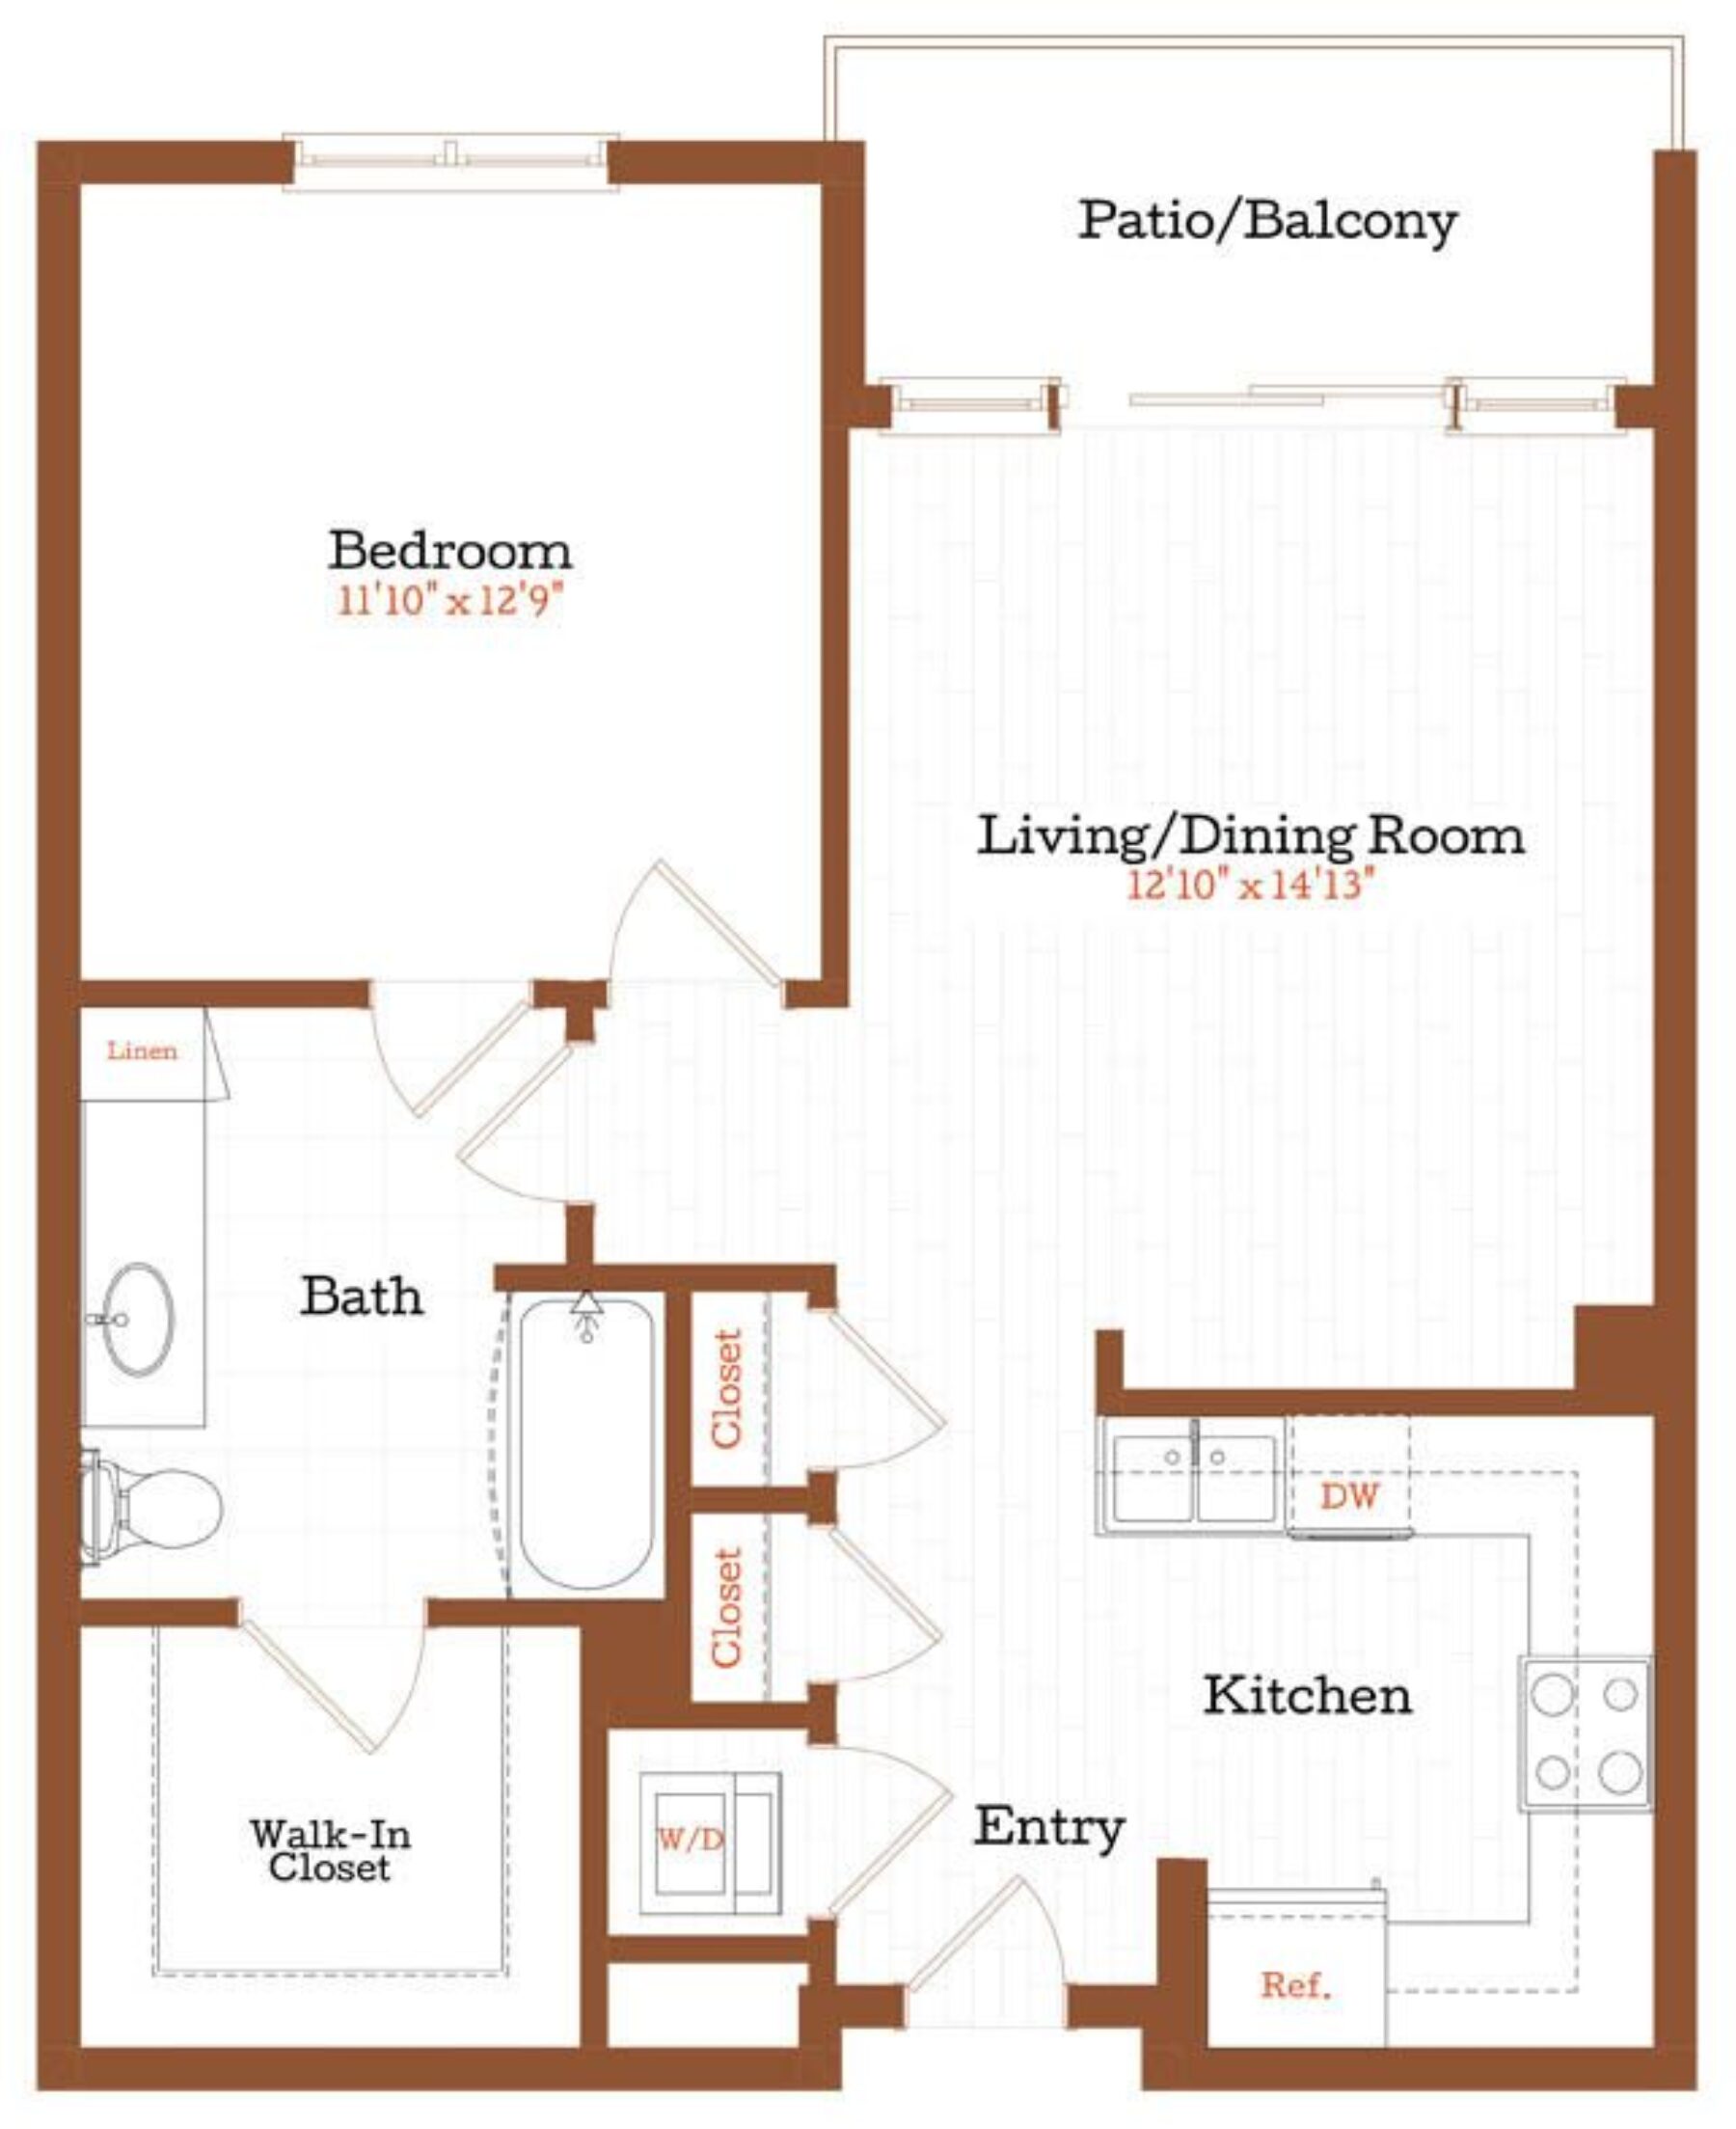 Plan Image: A3 - 1 Bedroom